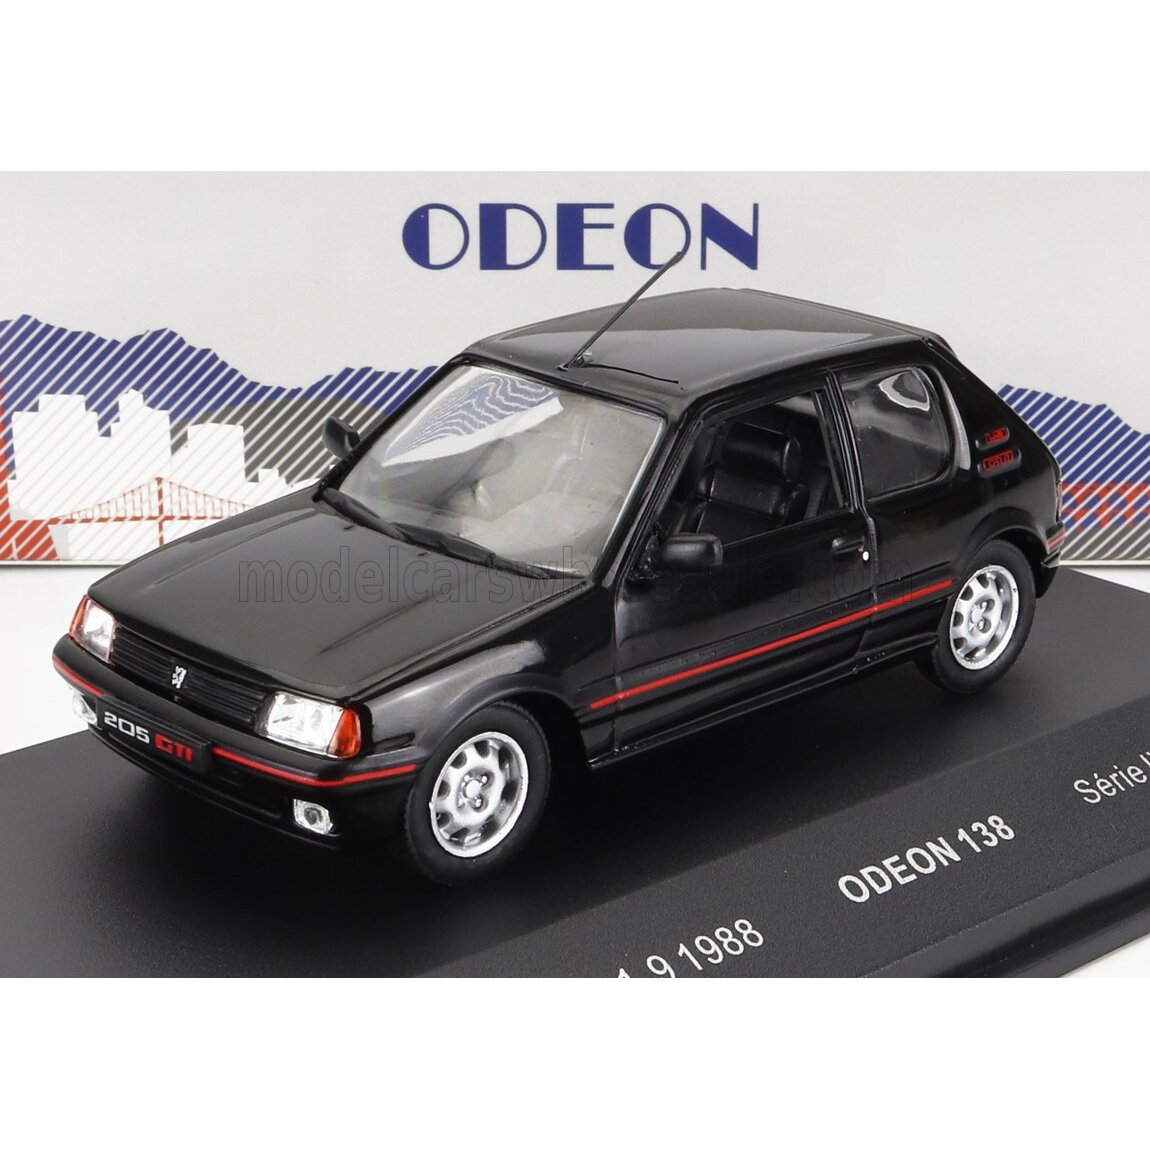 Odeon Peugeot 205 Gti 1.9 1988 Black - 1:43